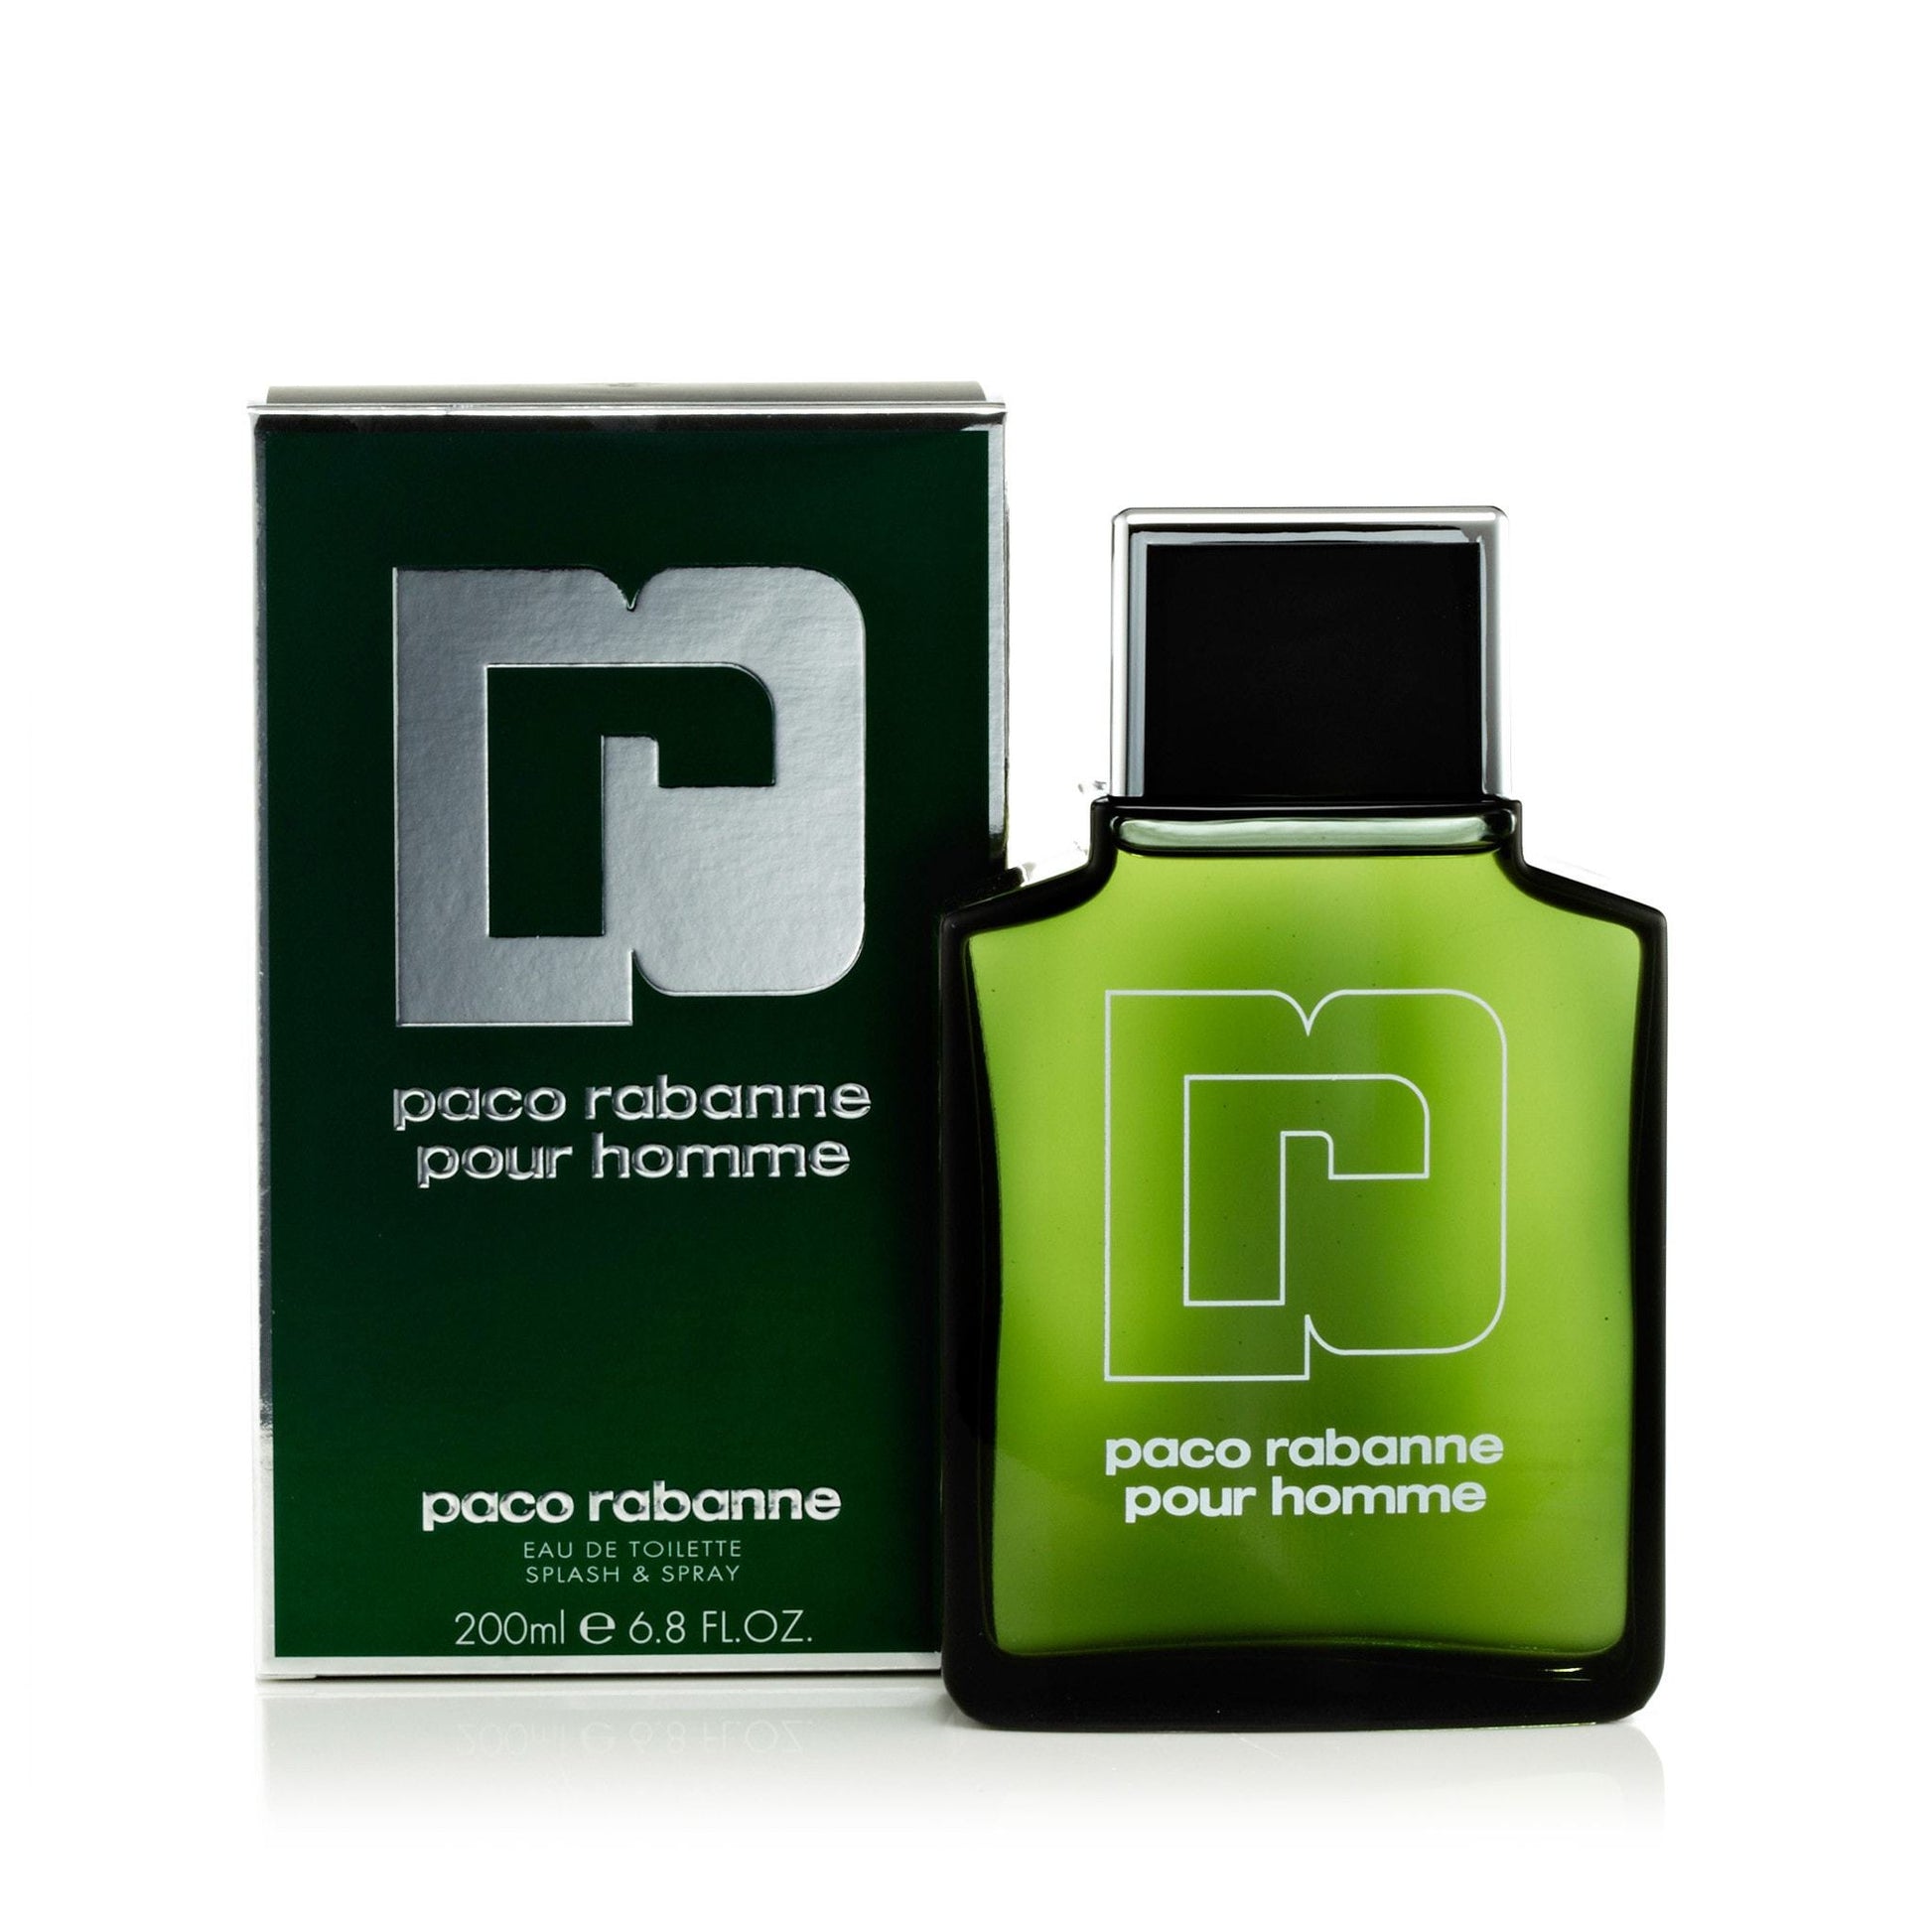 Paco Rabanne Eau de Toilette Spray for Men by Paco Rabanne, Product image 1